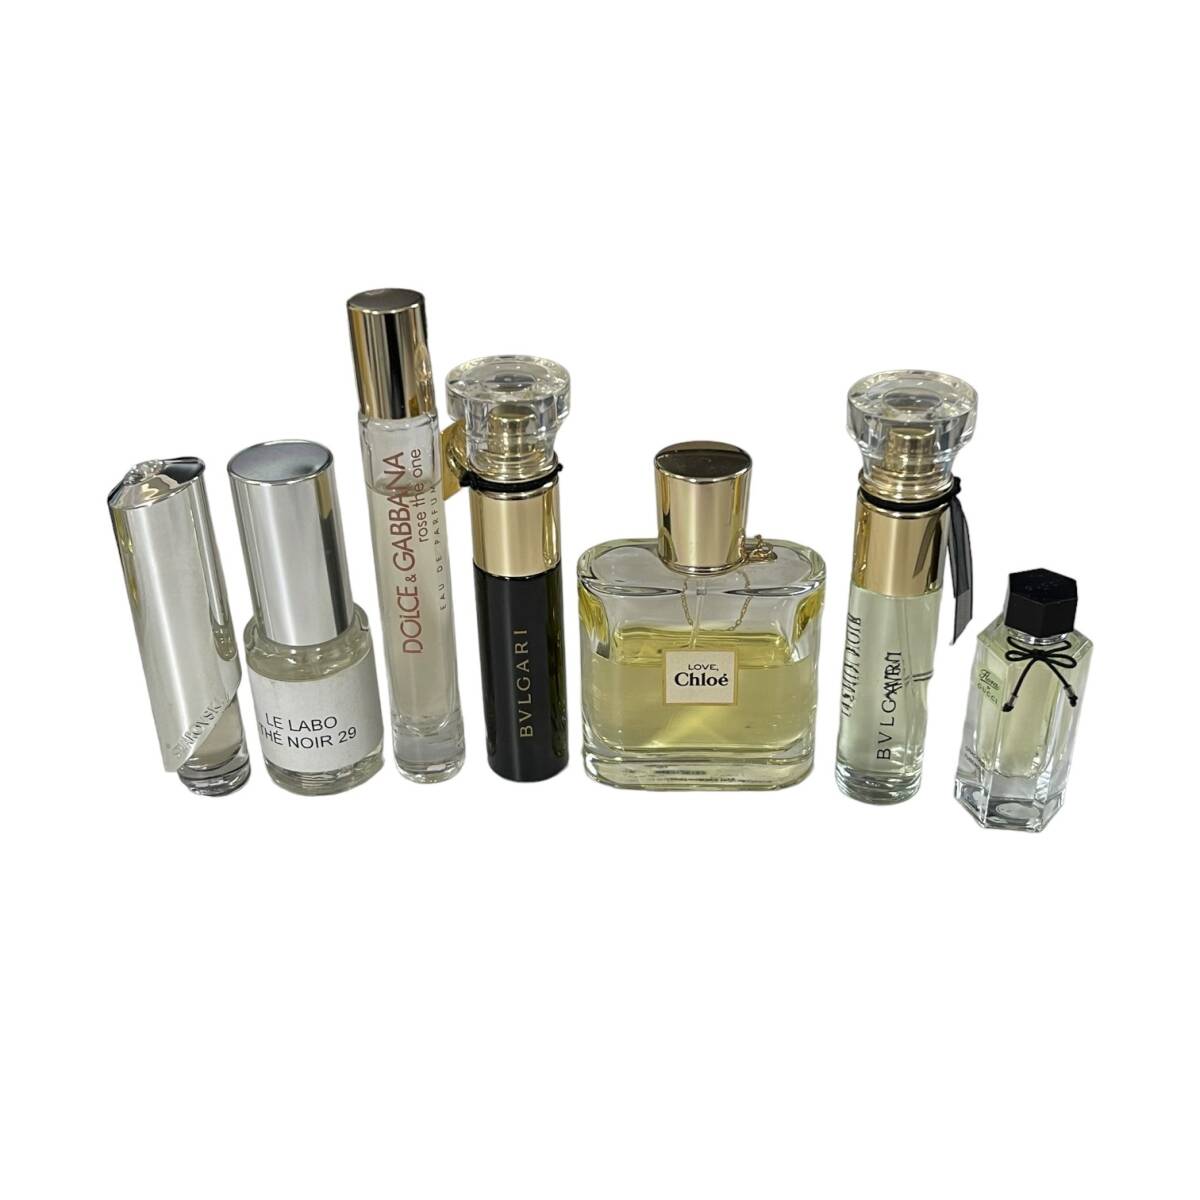 [ secondhand goods ] Rav Chloe o- floral o-doto crack 30ml GUCCI BVLGARI other brand Mini perfume 7 piece summarize kyA8951RD